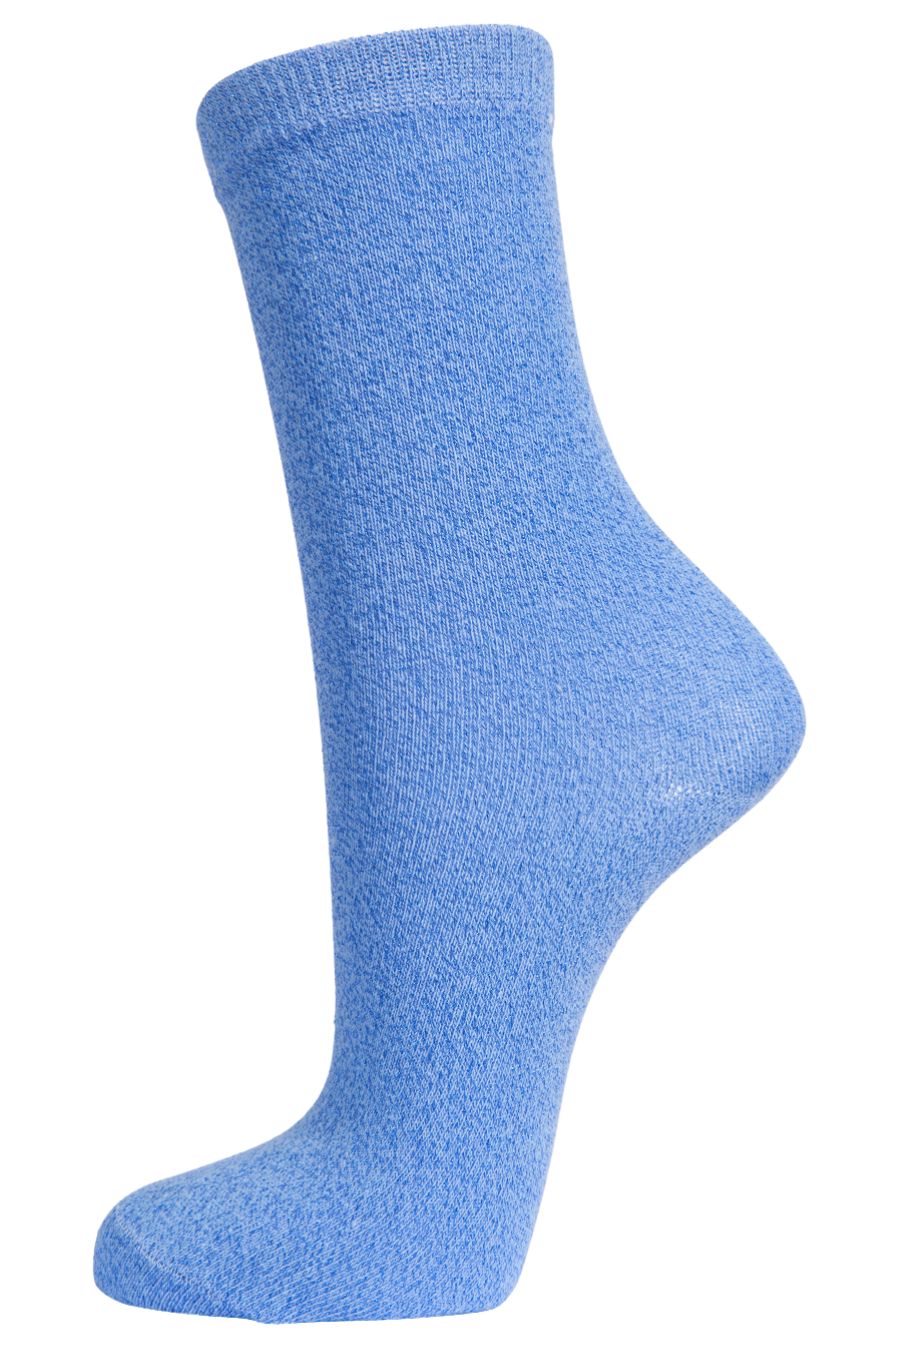 light blue ankle socks with royal blue glitter sparkle